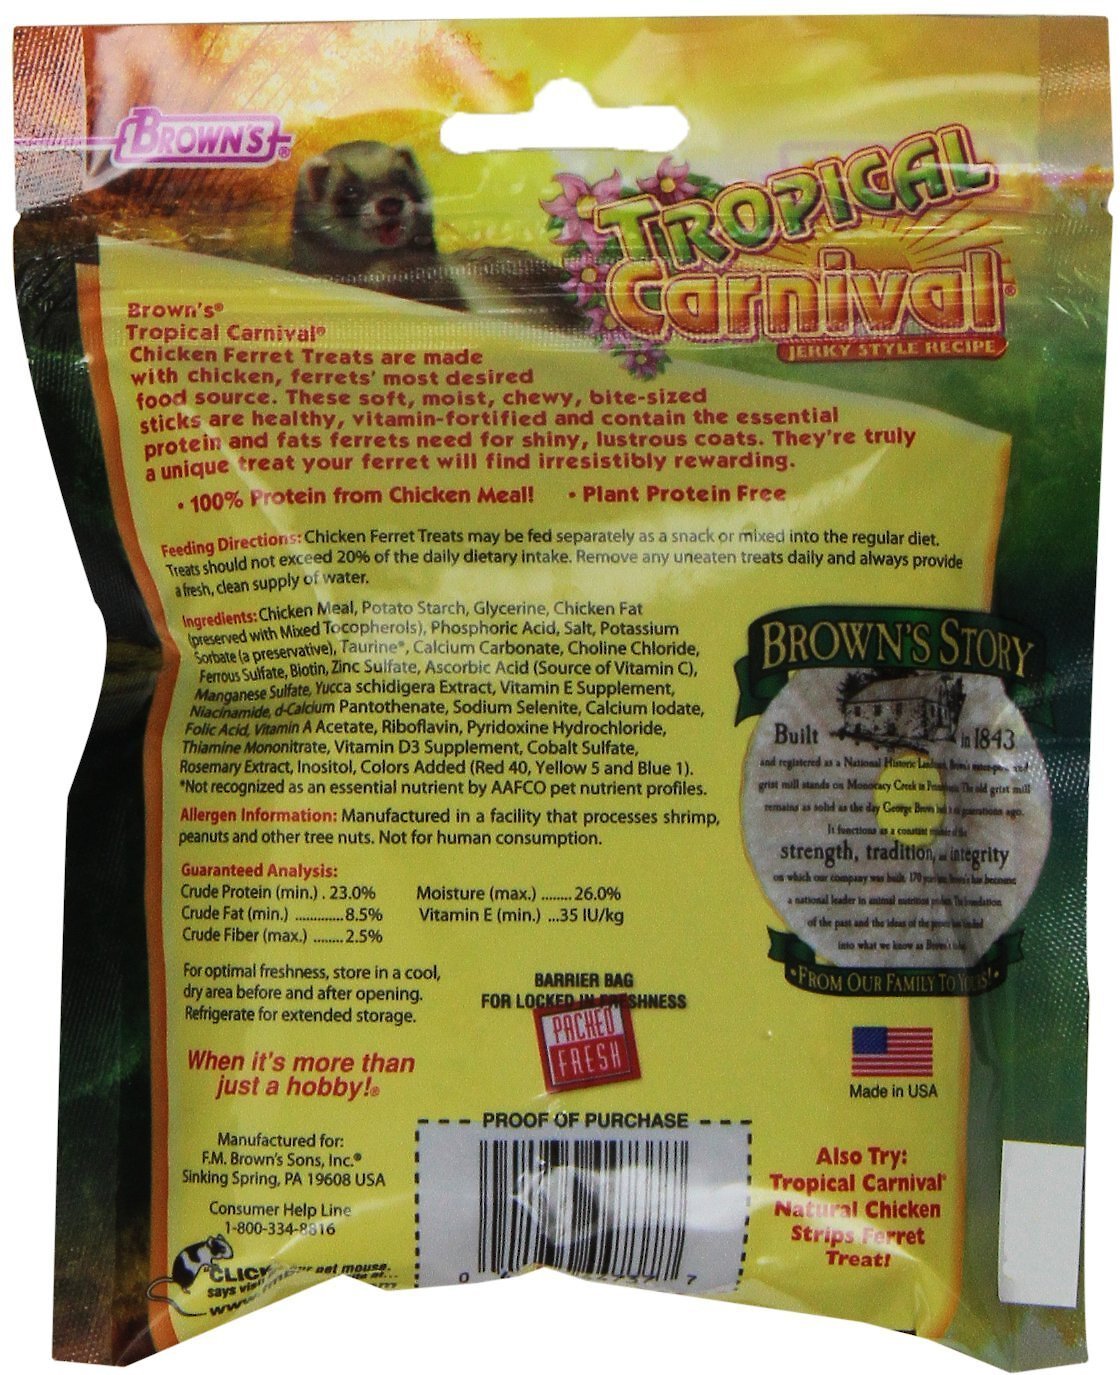 6. Browns Tropical Carnival Chicken Ferret Treats